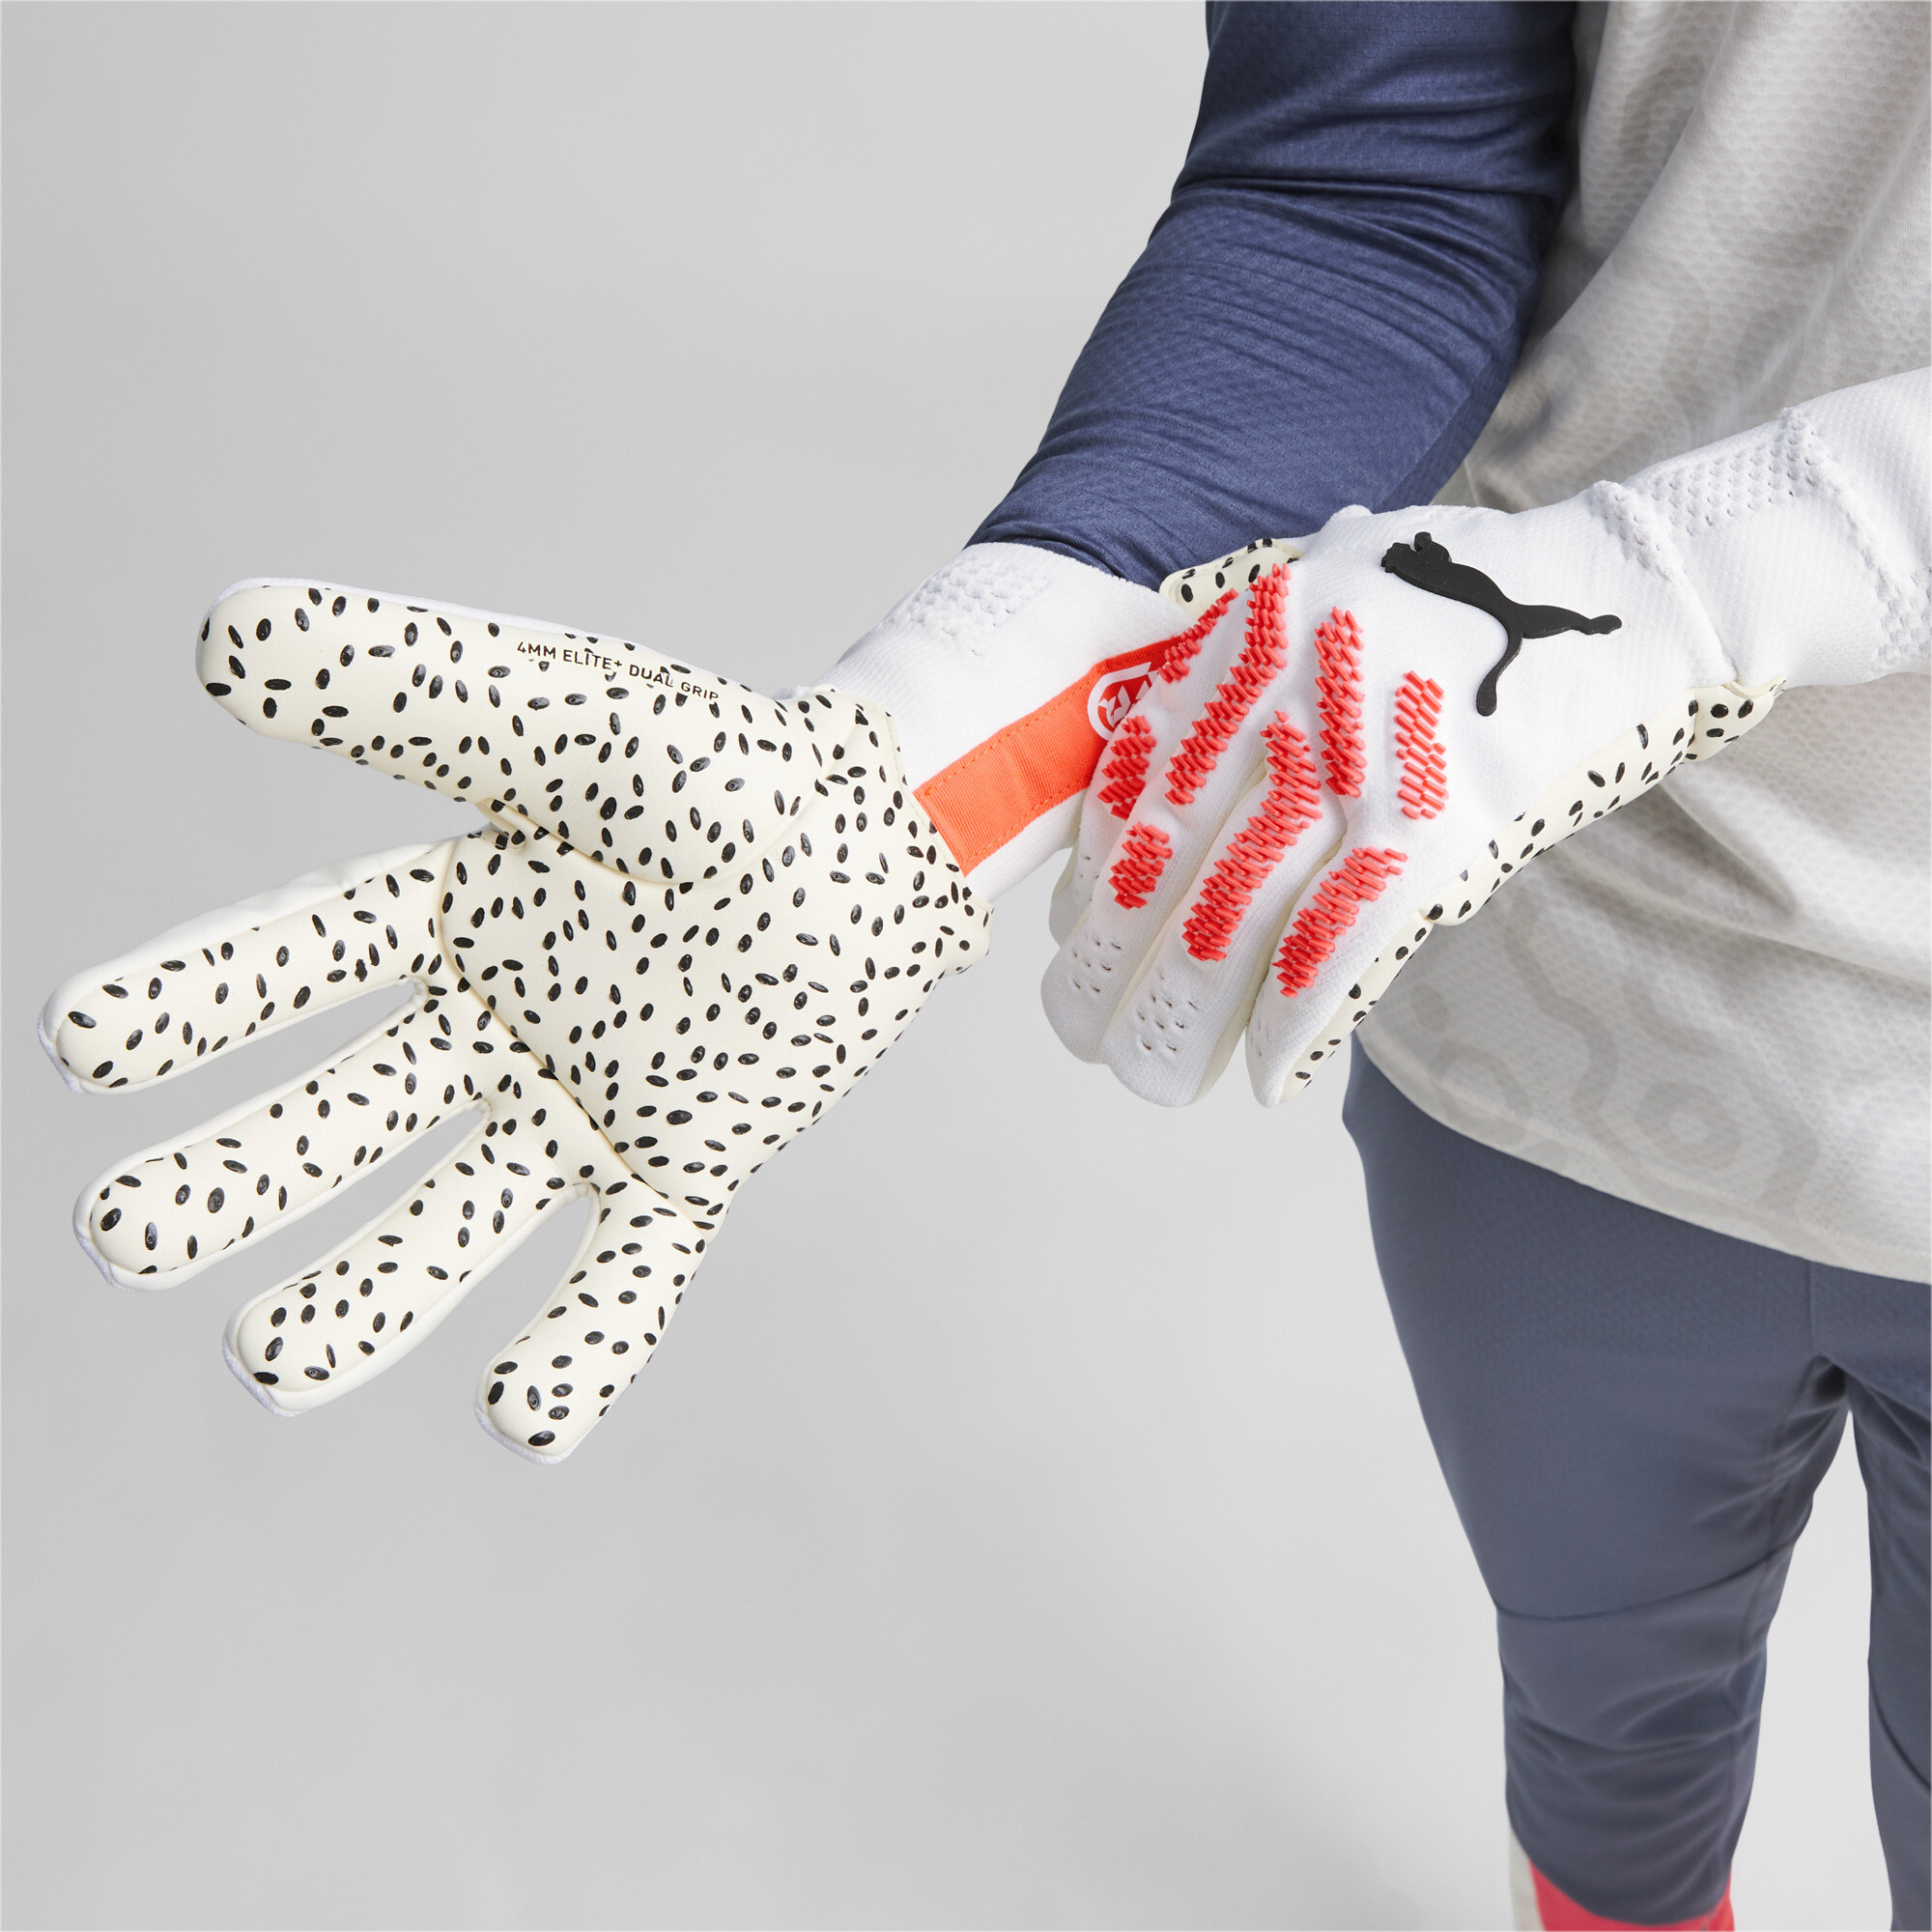 Men's Puma FUTURE Ultimate Negative Cut Football Goalkeeper Gloves, White, Size 8.5, Accessories